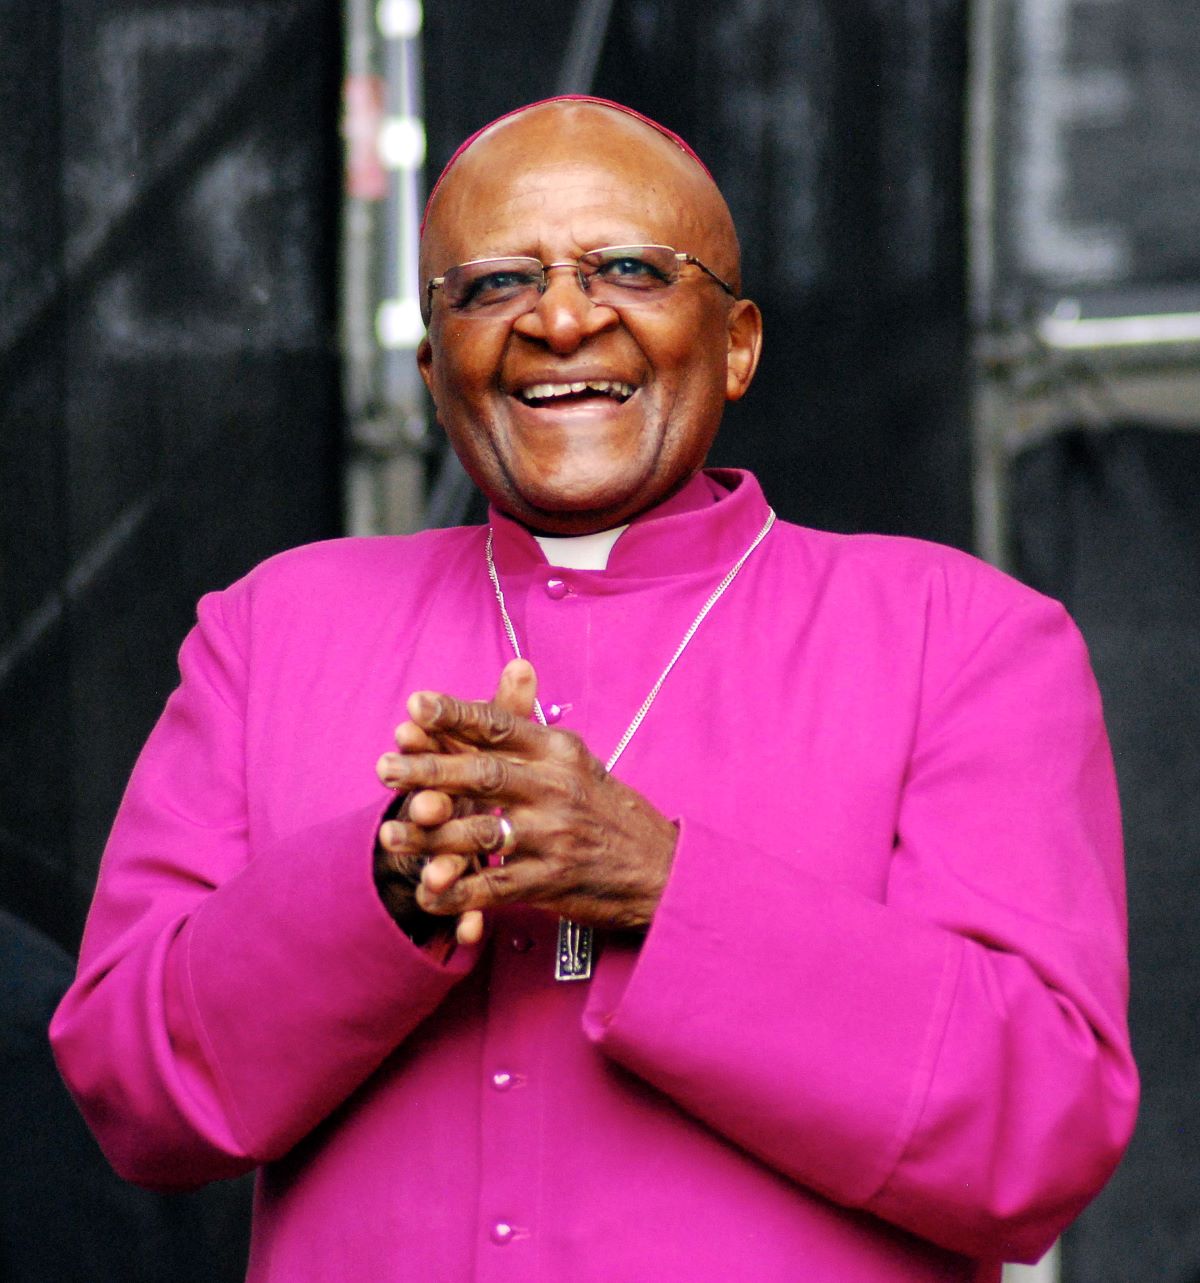 Archbishop Desmond Tutu at COP17 climate conference by Kristen Opalinski